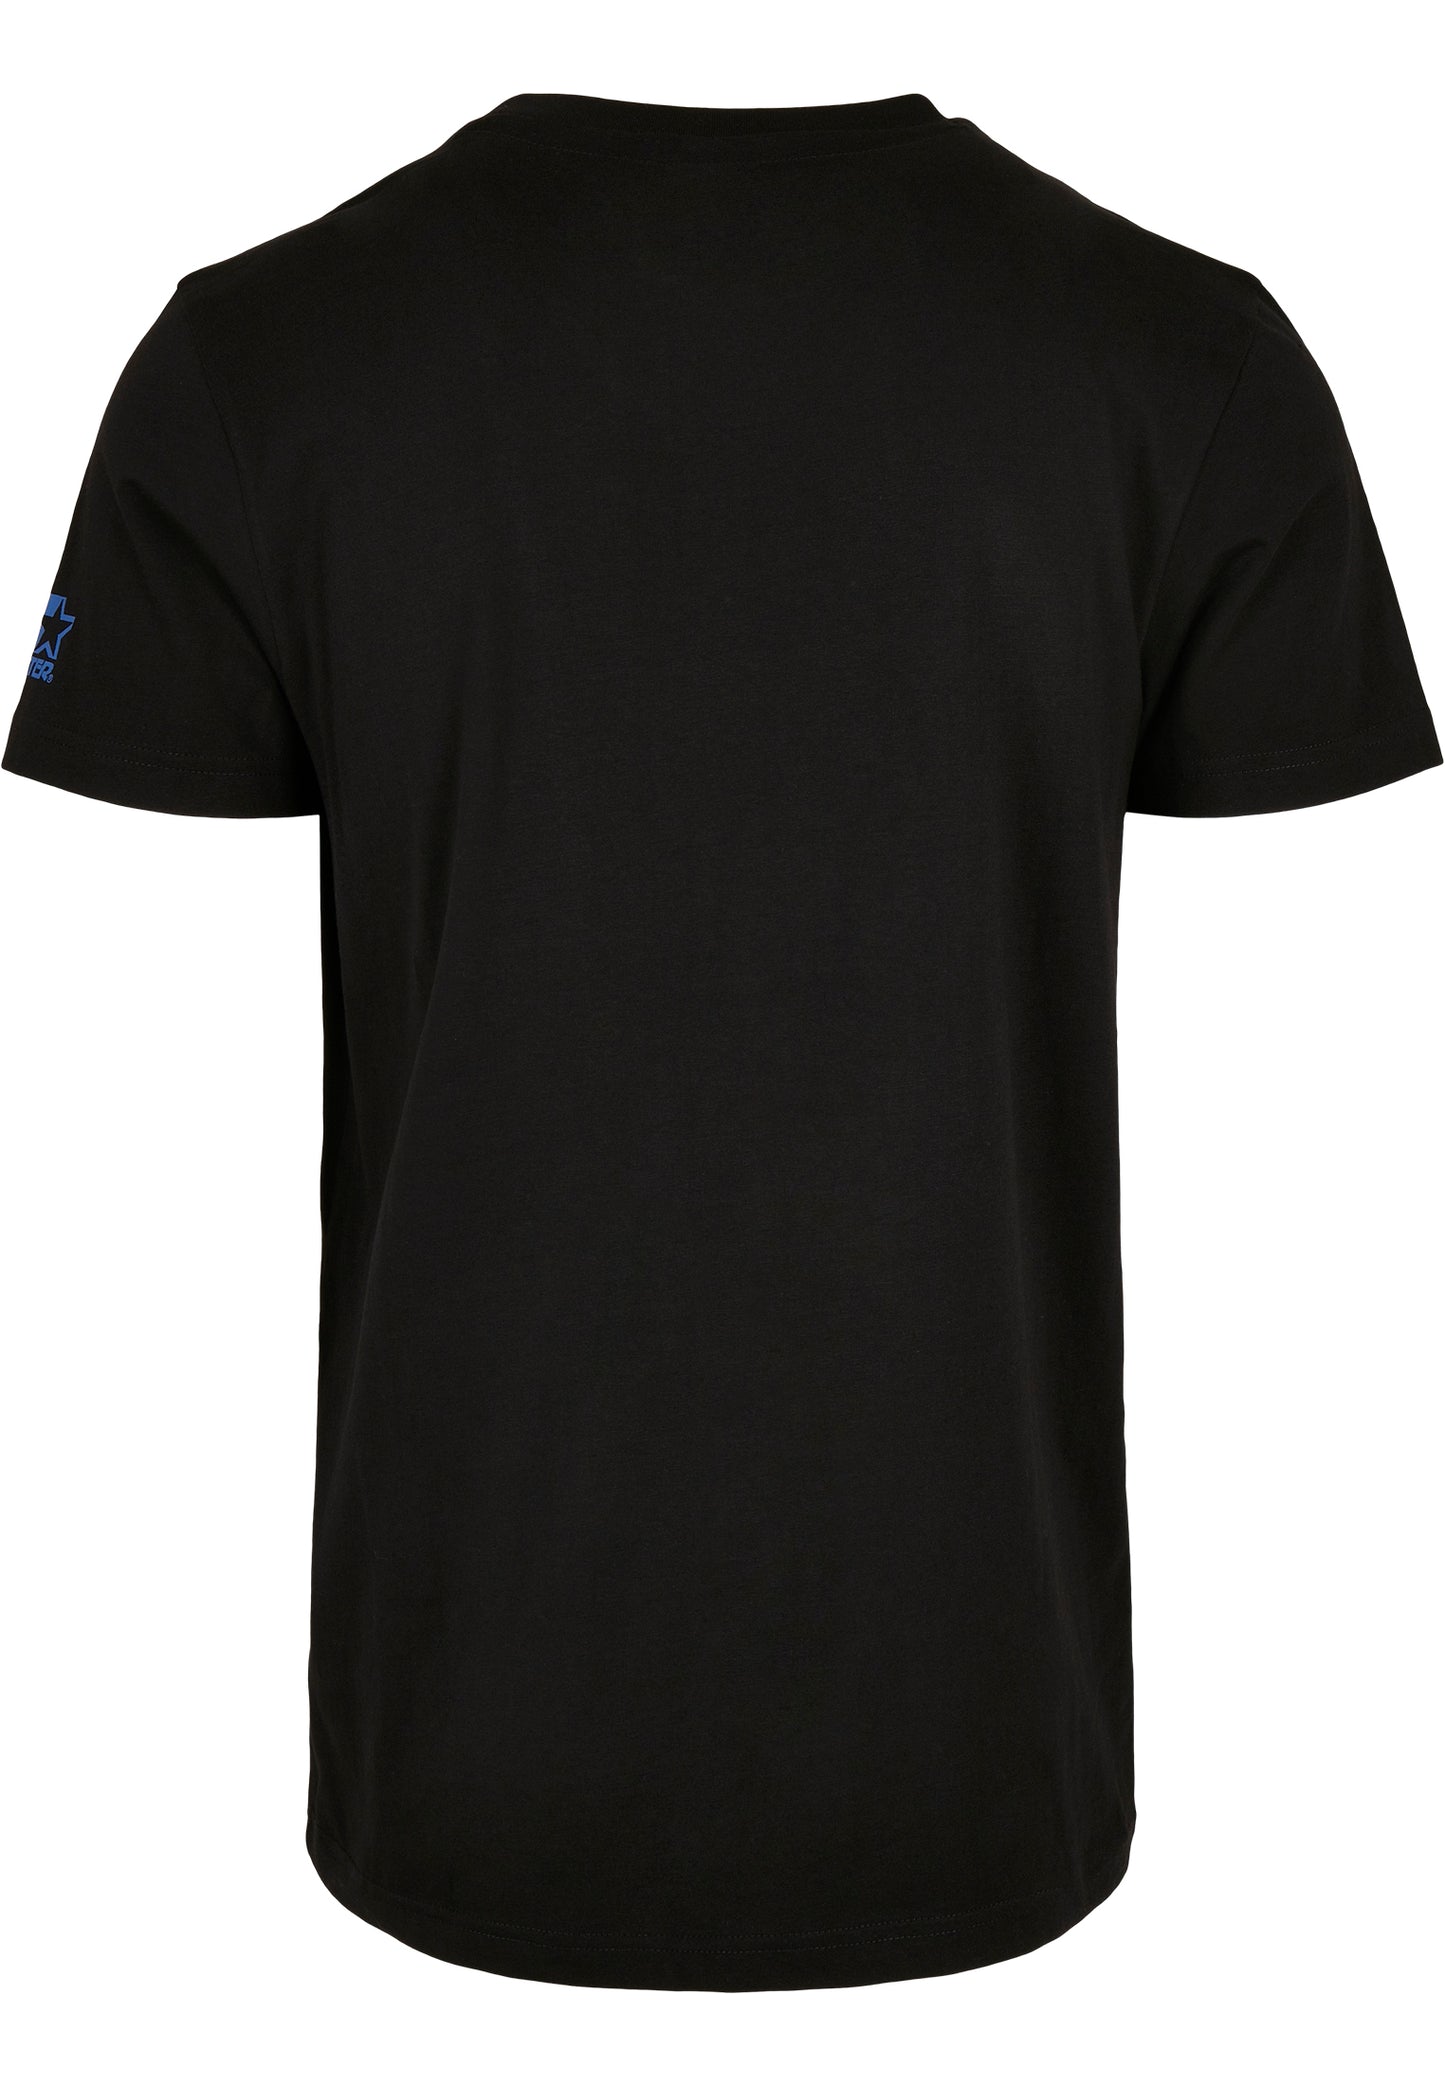 Starter Two Color Logo T-Shirt Schwarz / Blau